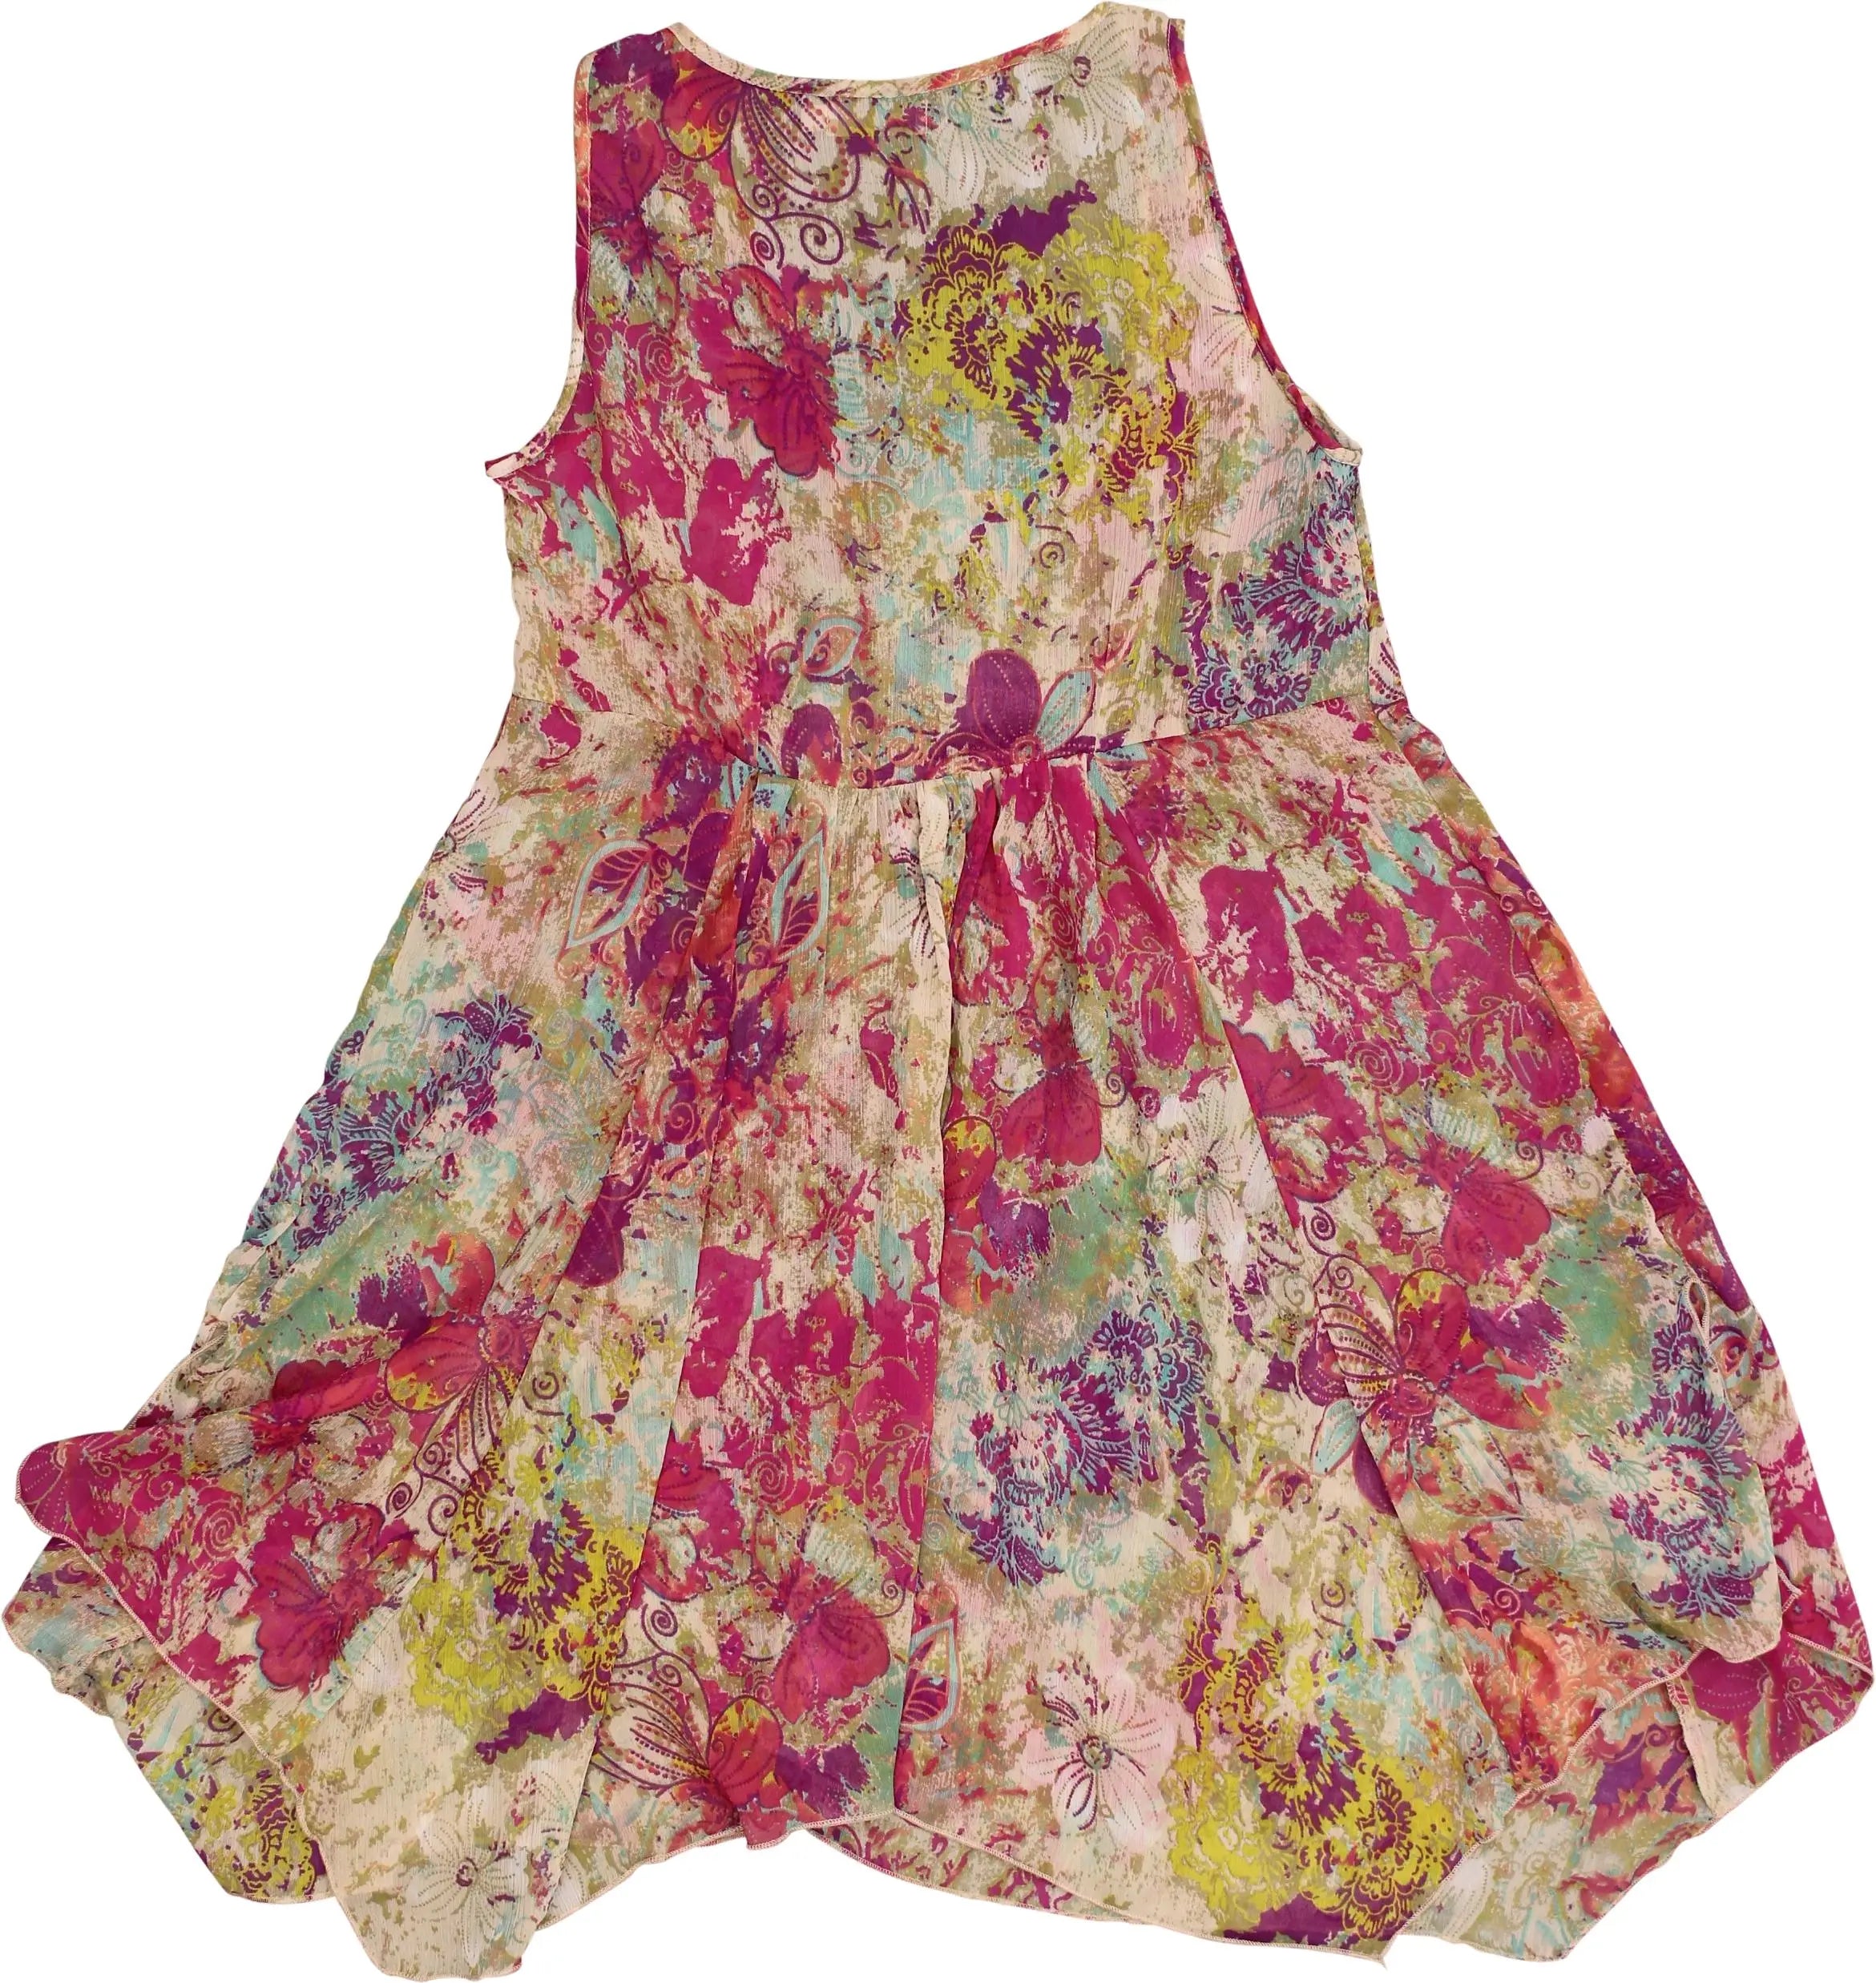 Bon A Parte - BLUE0715- ThriftTale.com - Vintage and second handclothing